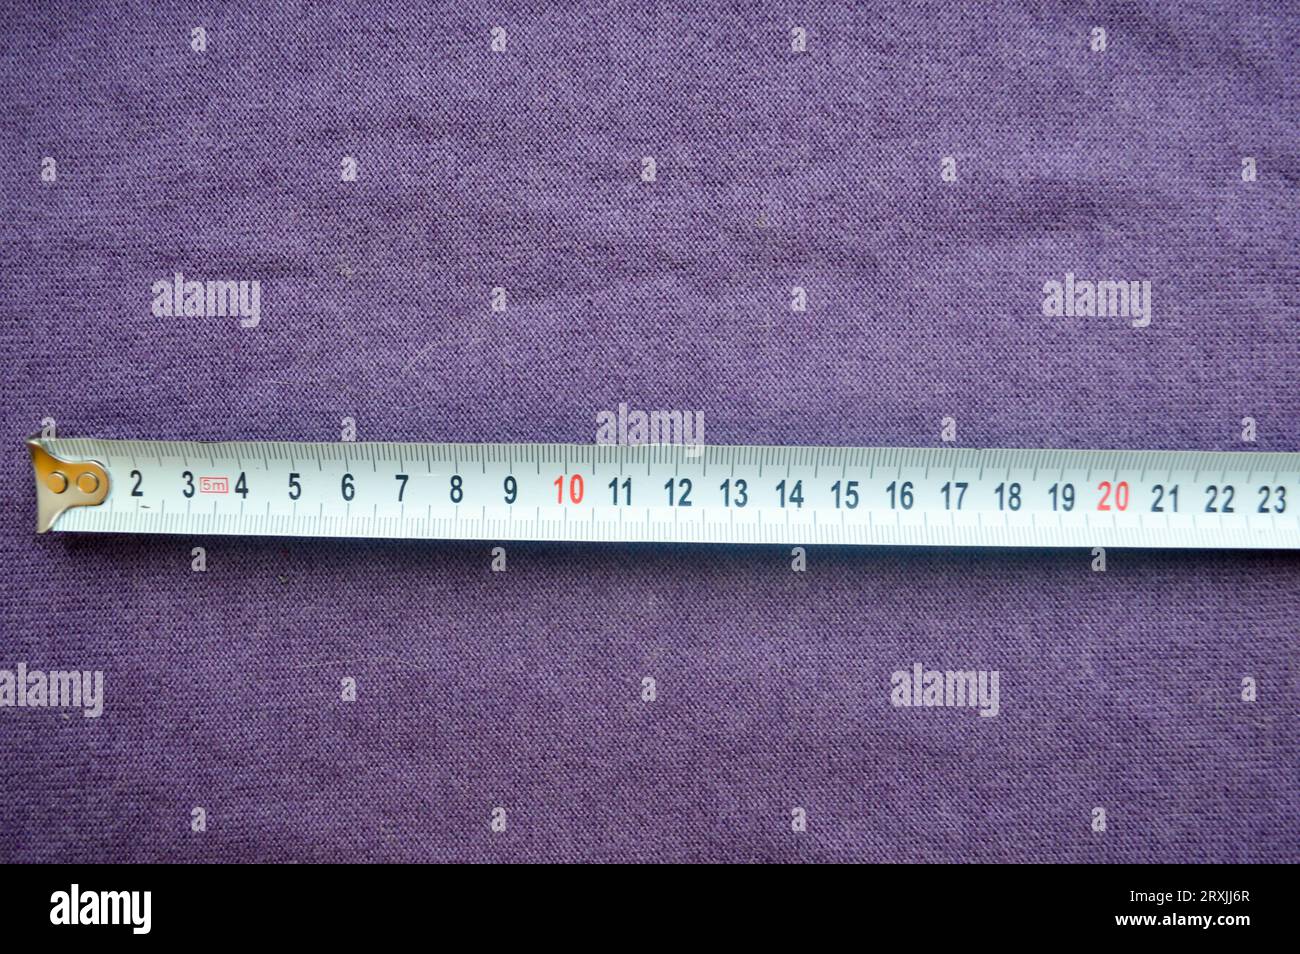 https://c8.alamy.com/comp/2RXJJ6R/roulette-is-23-centimeters-on-a-background-of-purple-cloth-2RXJJ6R.jpg